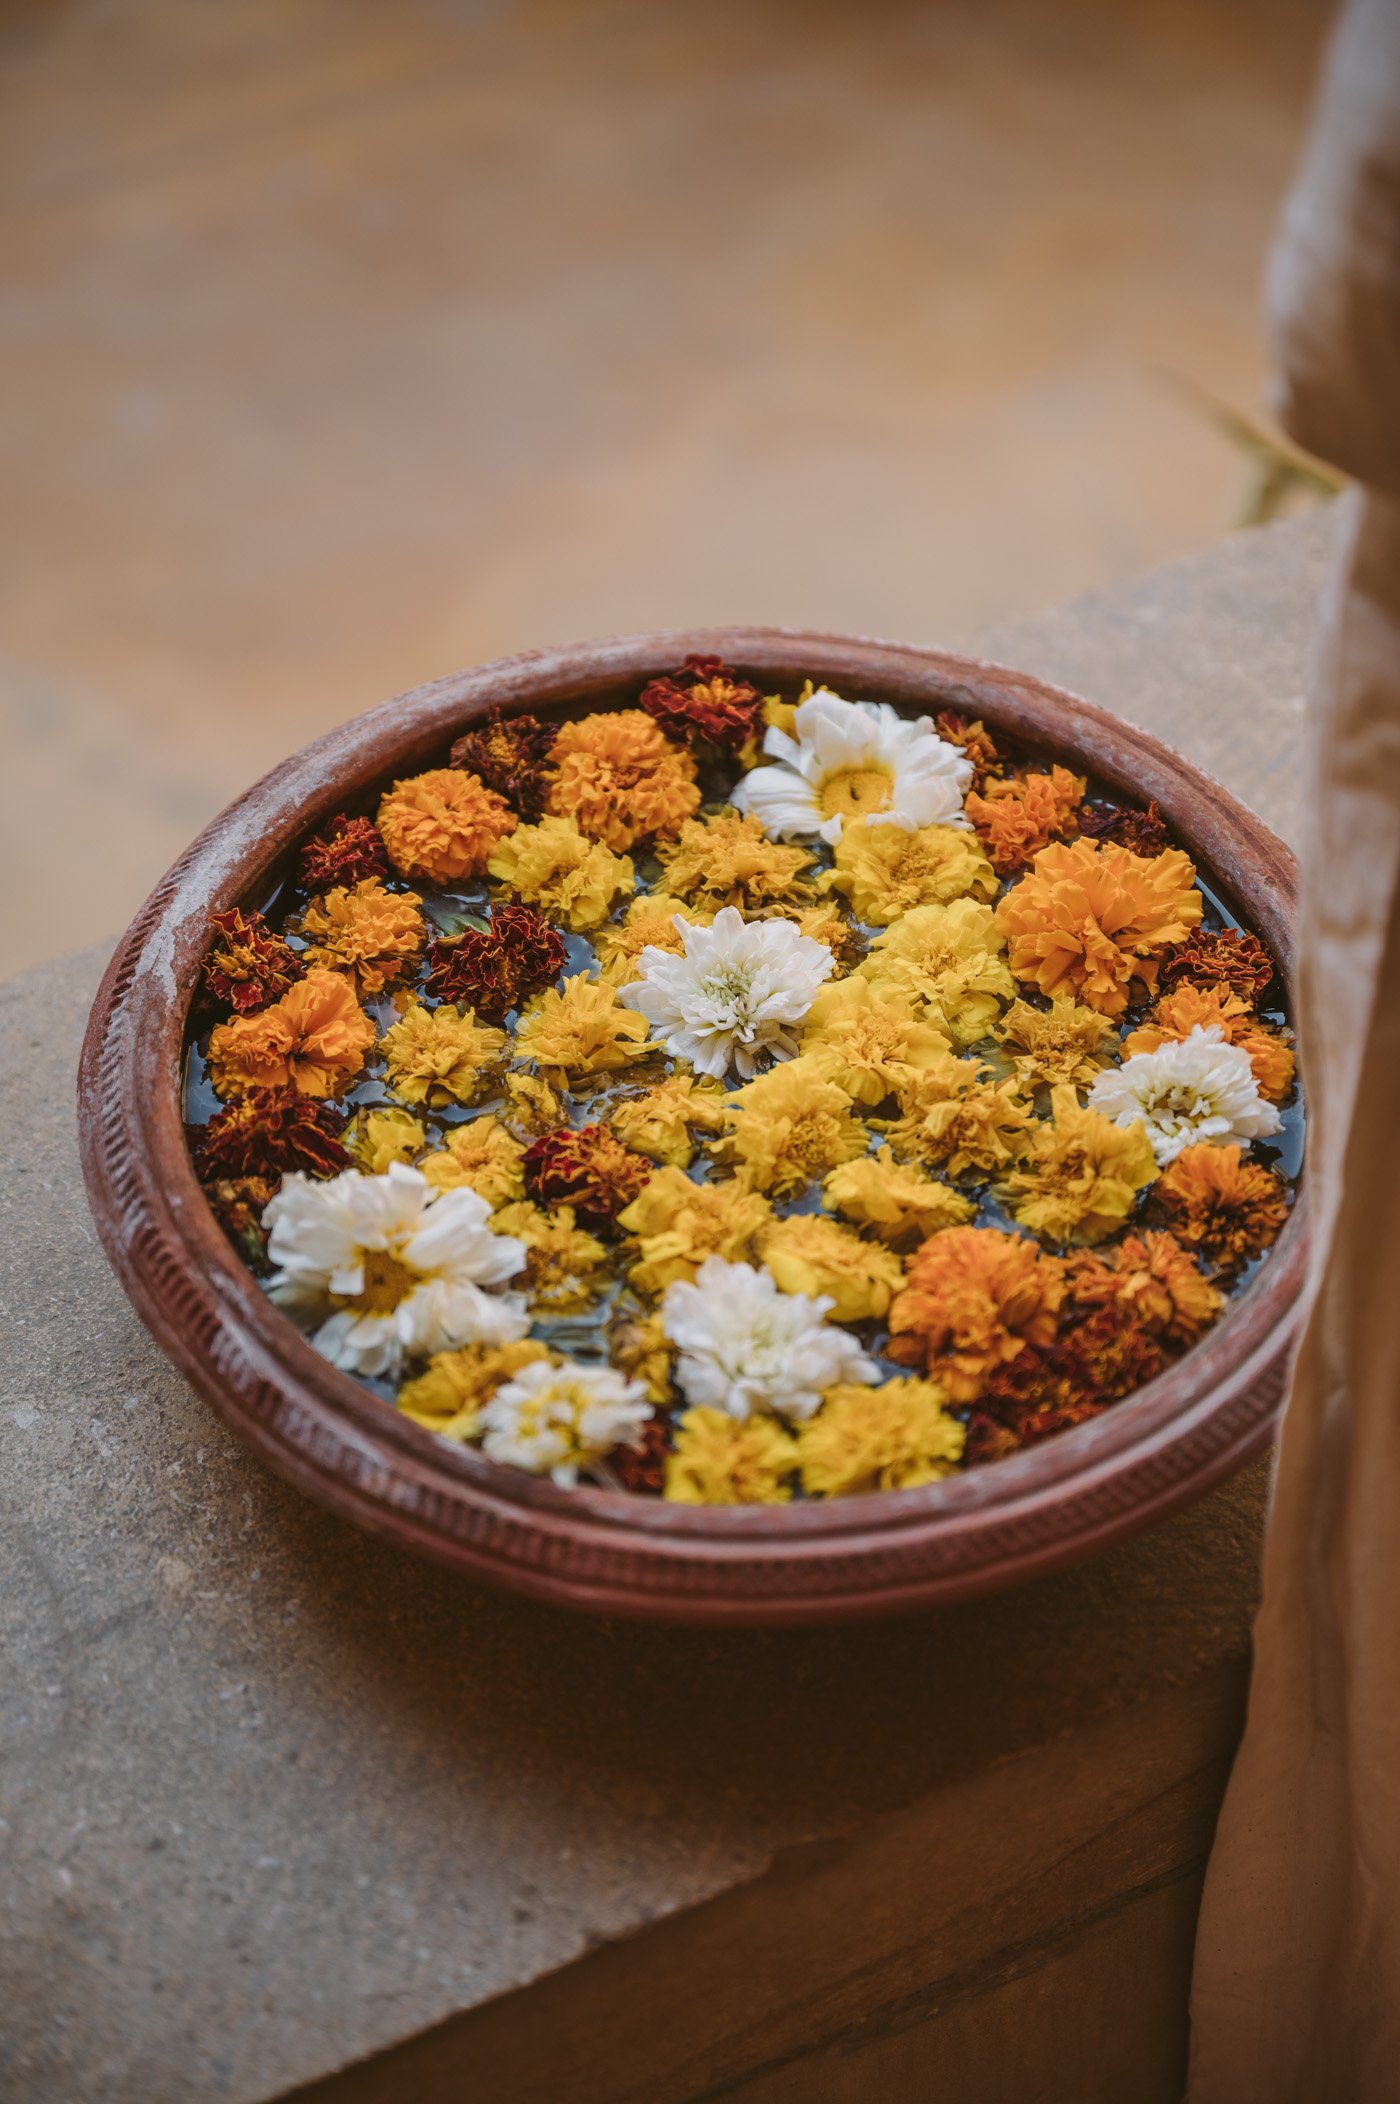 Marigolds in Rajasthan